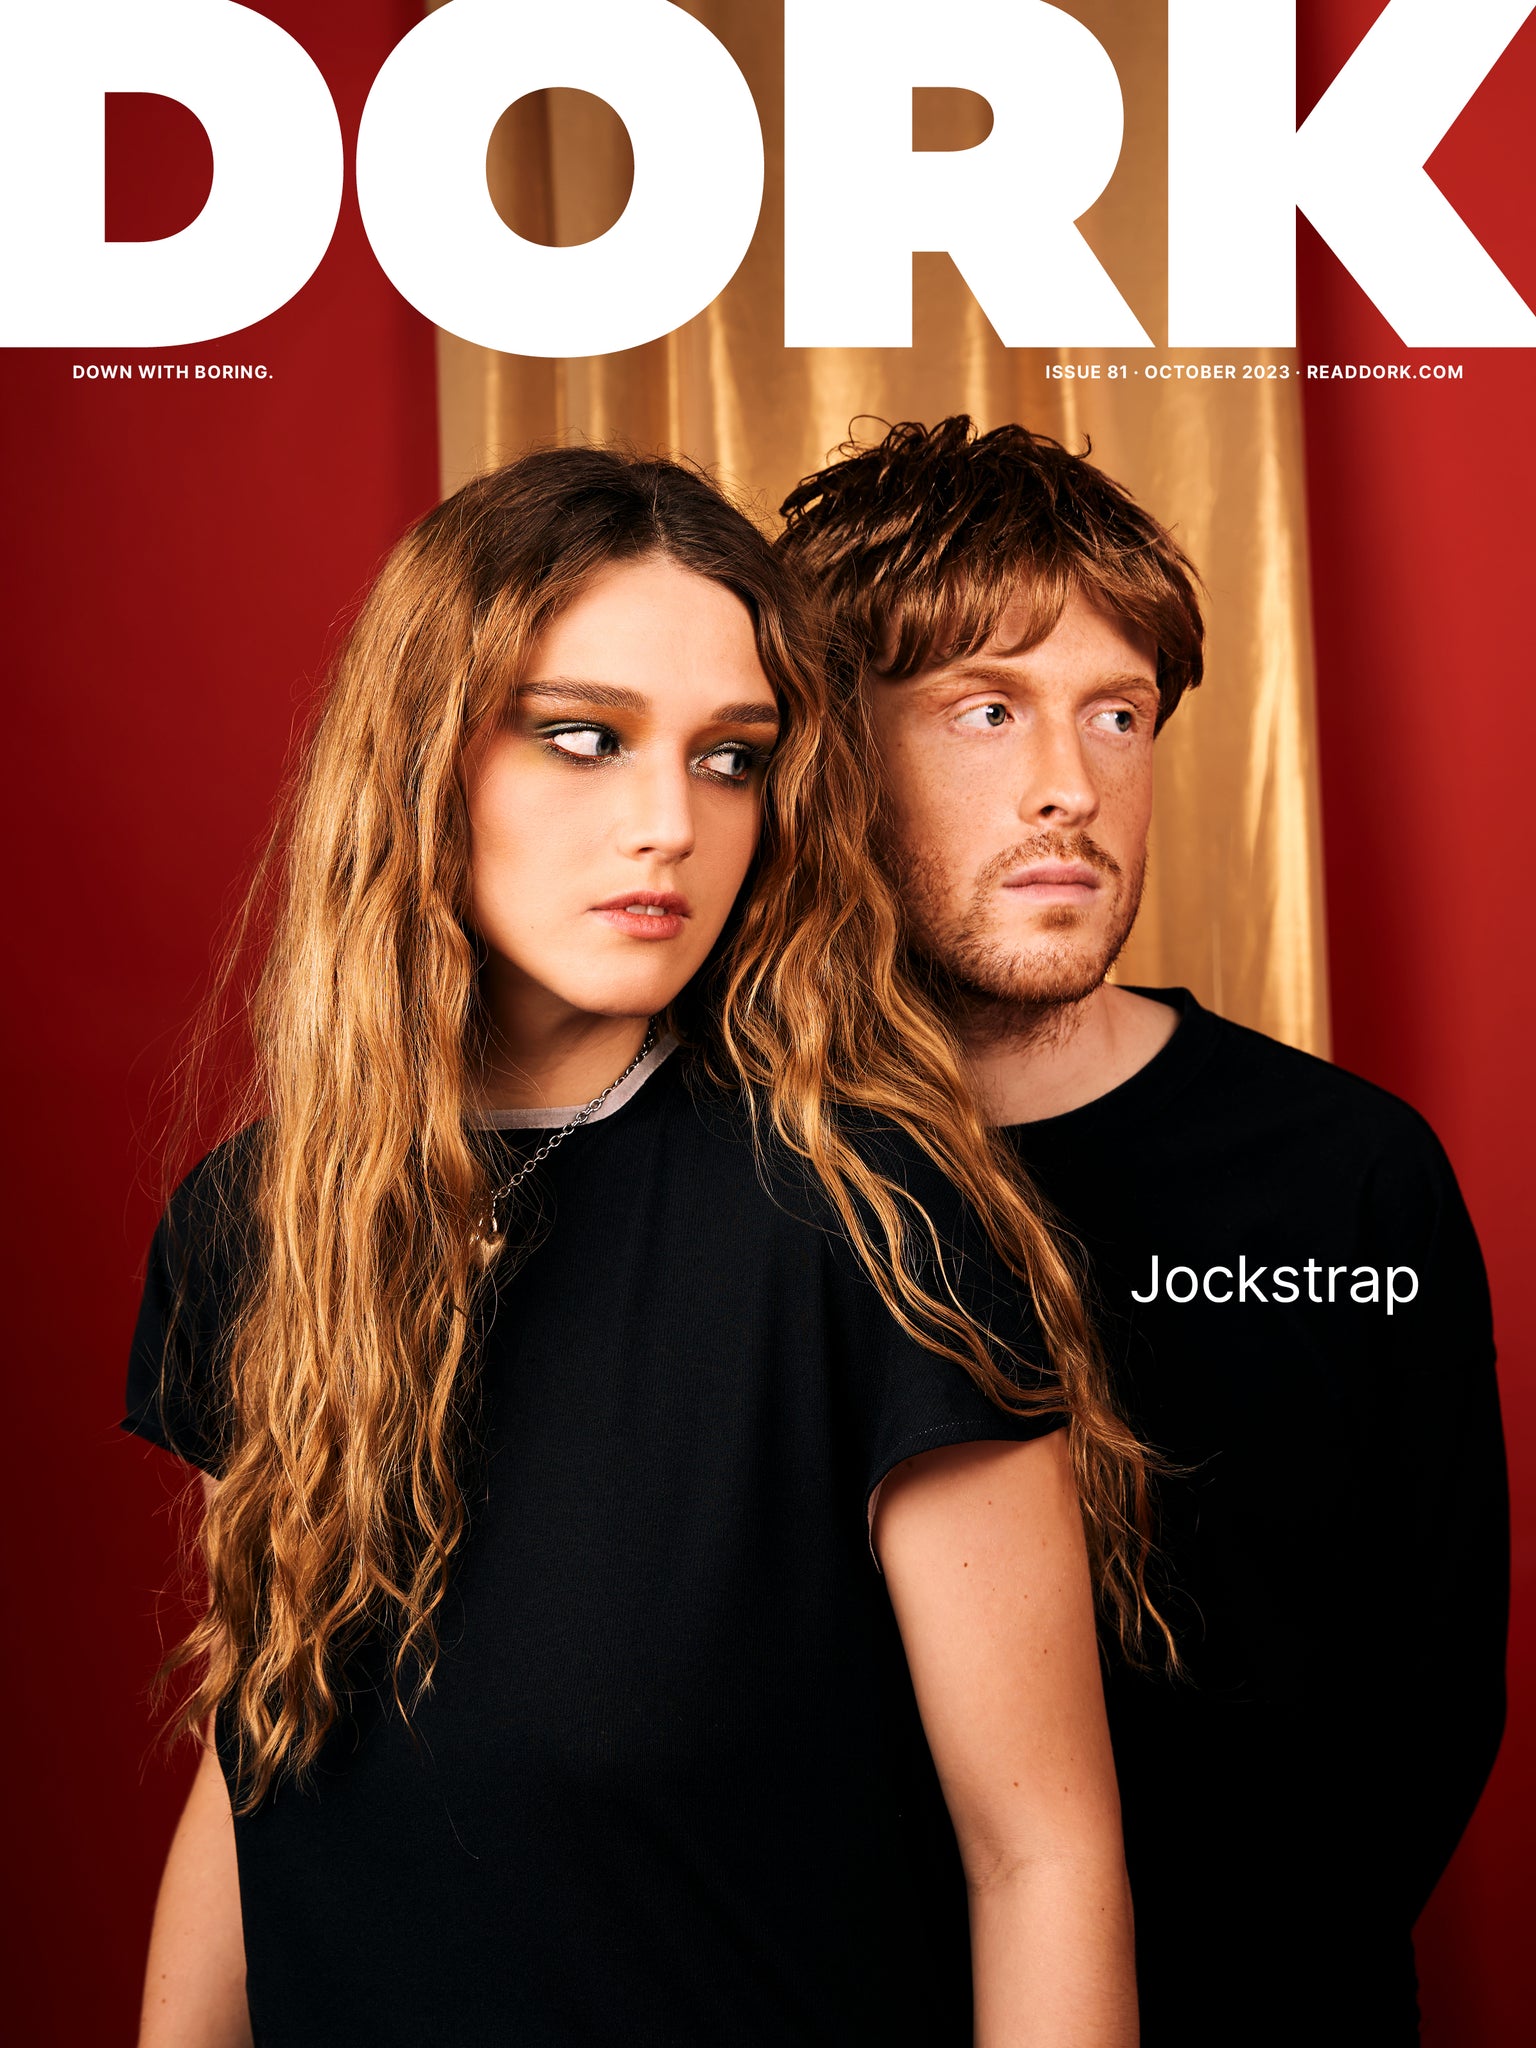 louis dork magazine｜TikTok Search